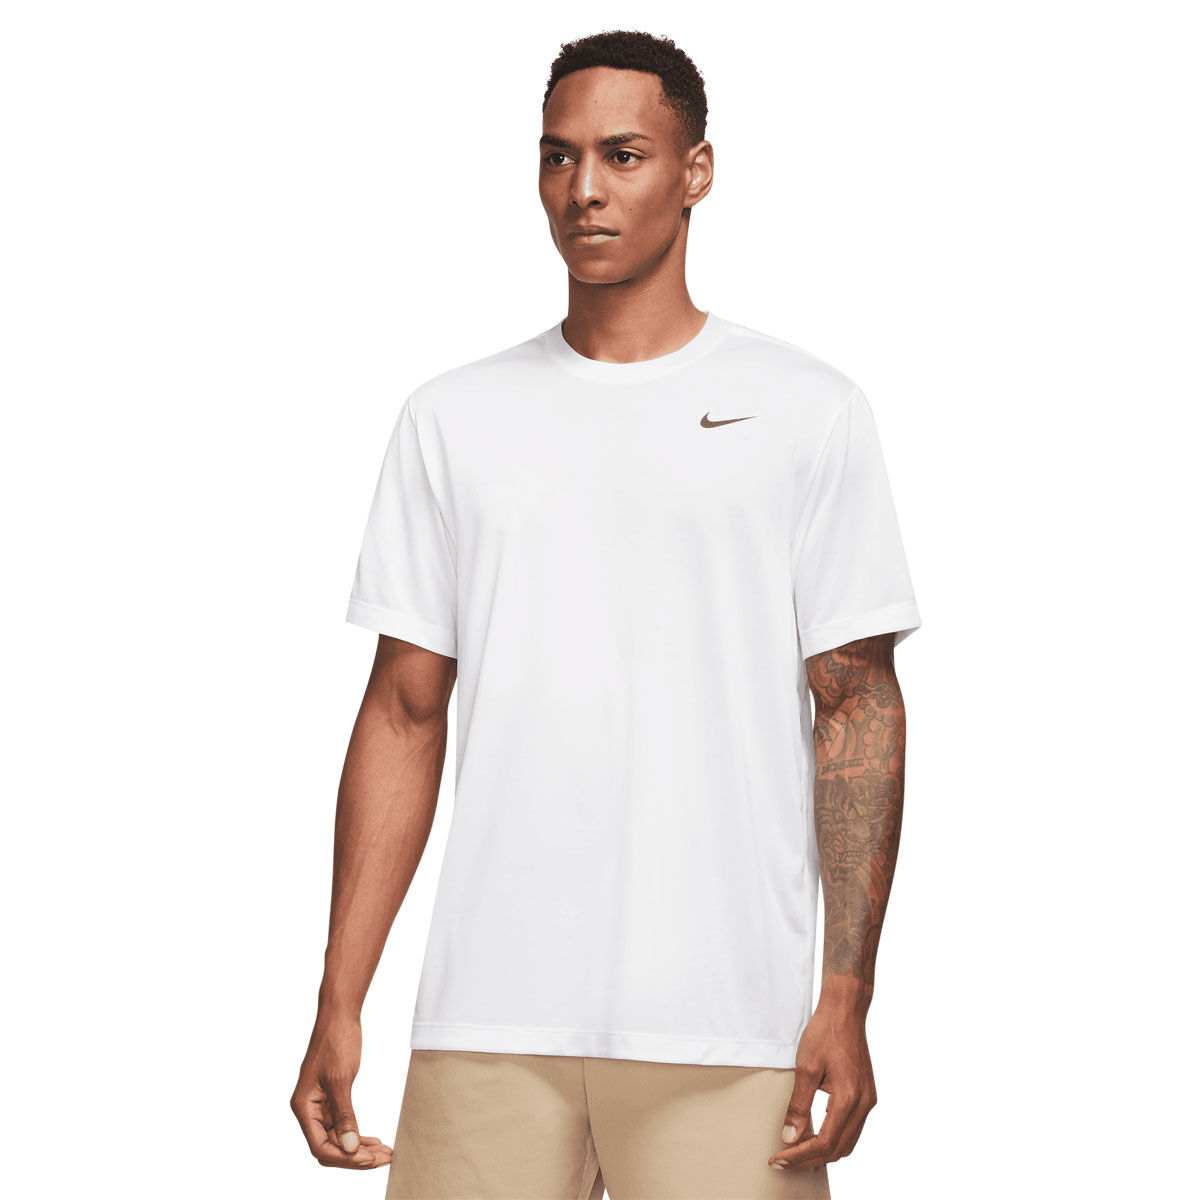 Nike Dri-FIT Local Legend Practice (MLB Washington Nationals) Men's T-Shirt